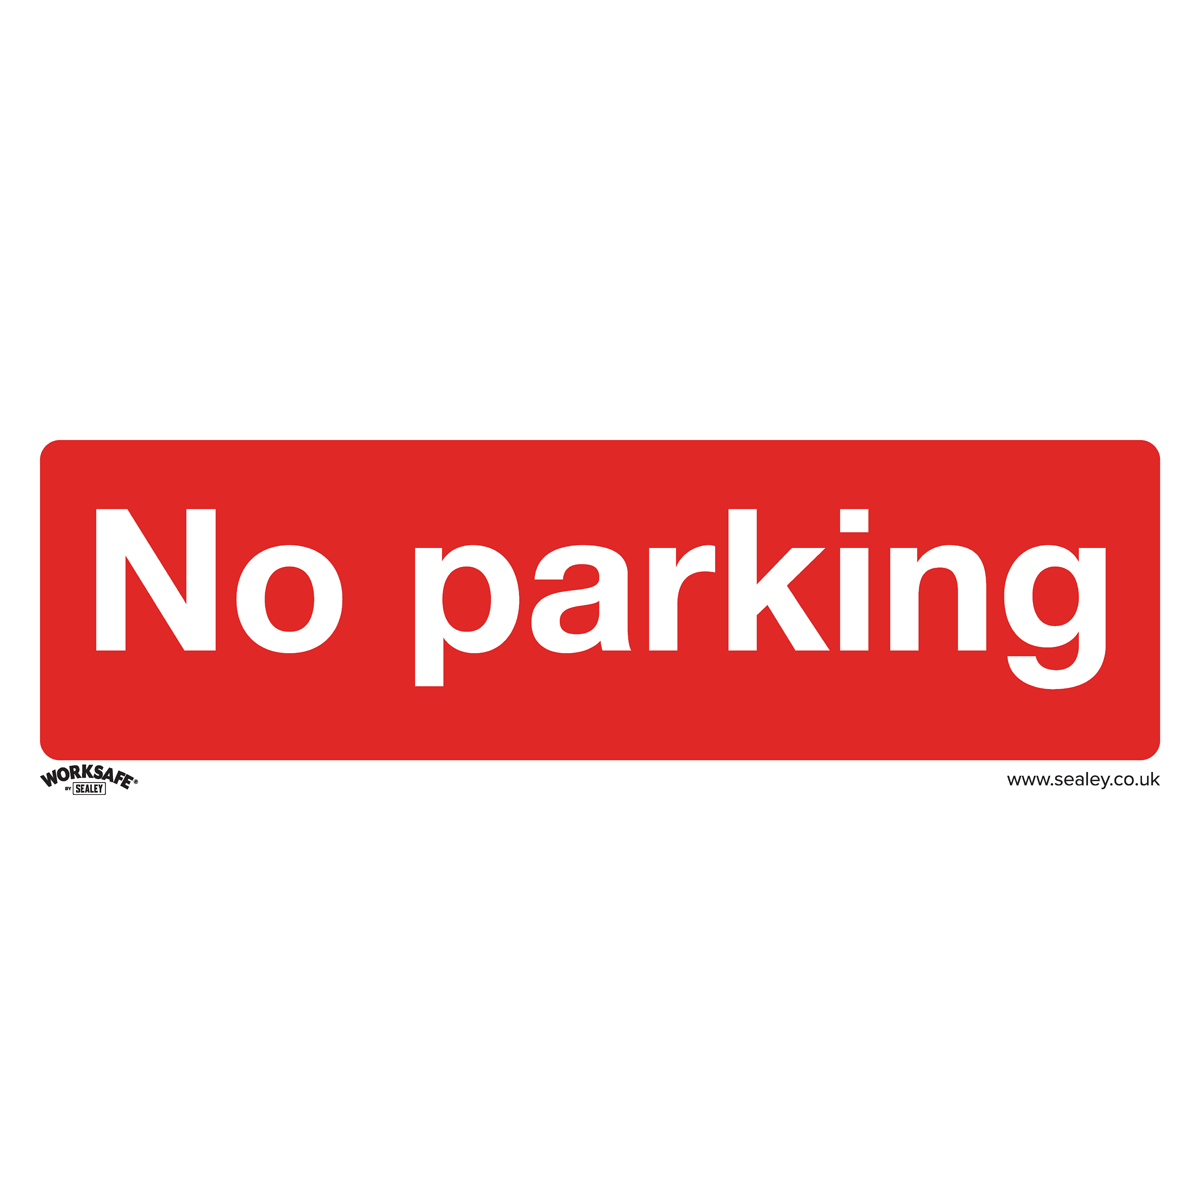 Prohibition Safety Sign - No Parking - Rigid Plastic - SS16P1 - Farming Parts